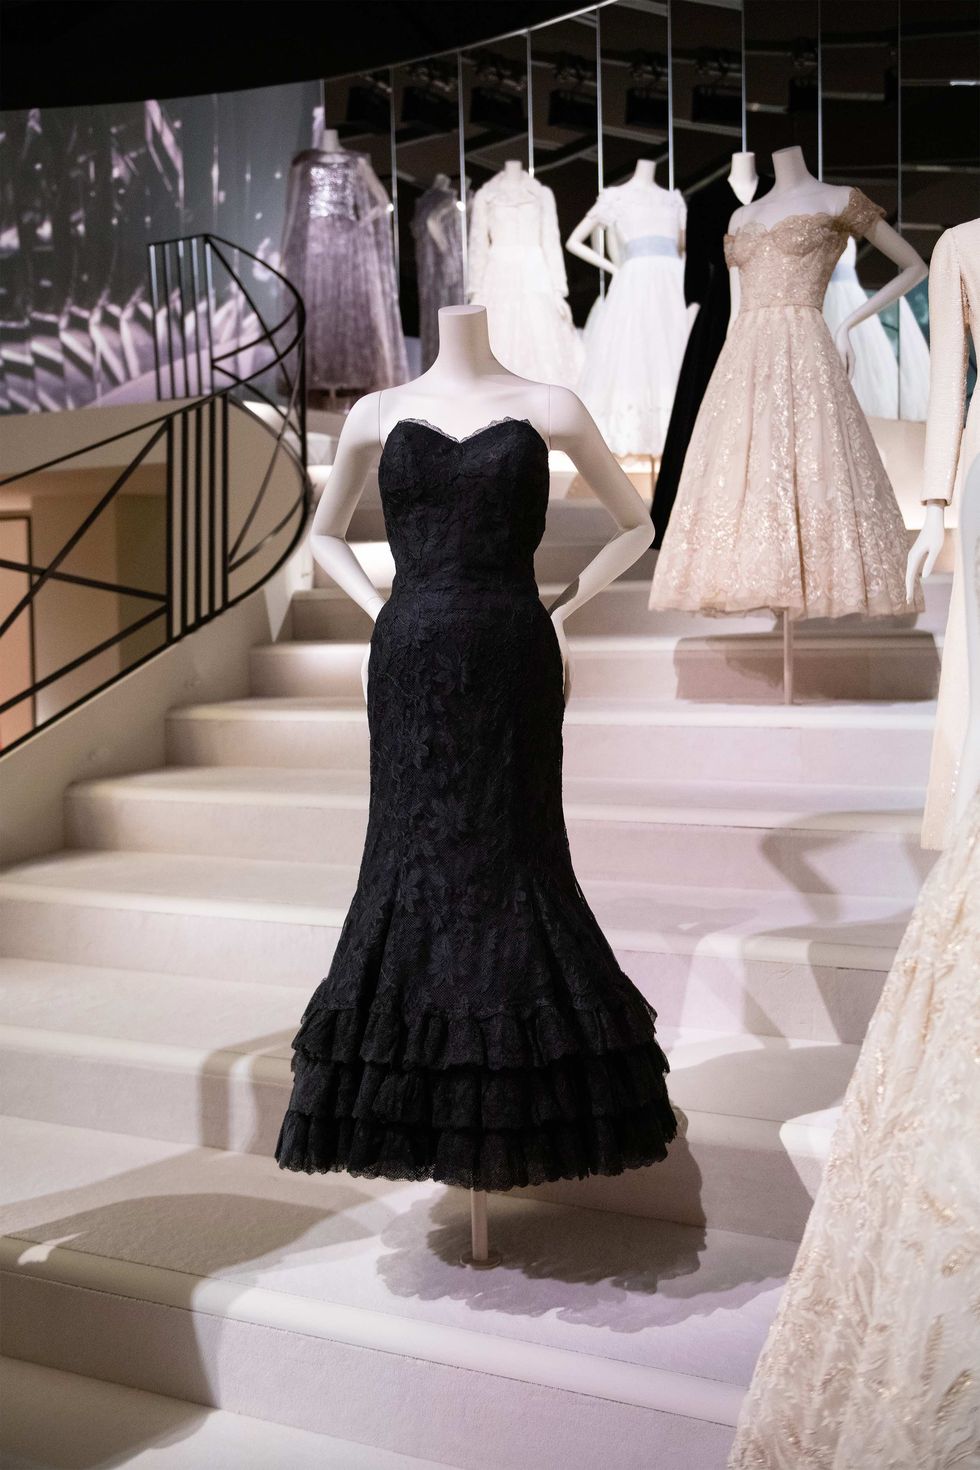 Little Black Dress. 1925-1968